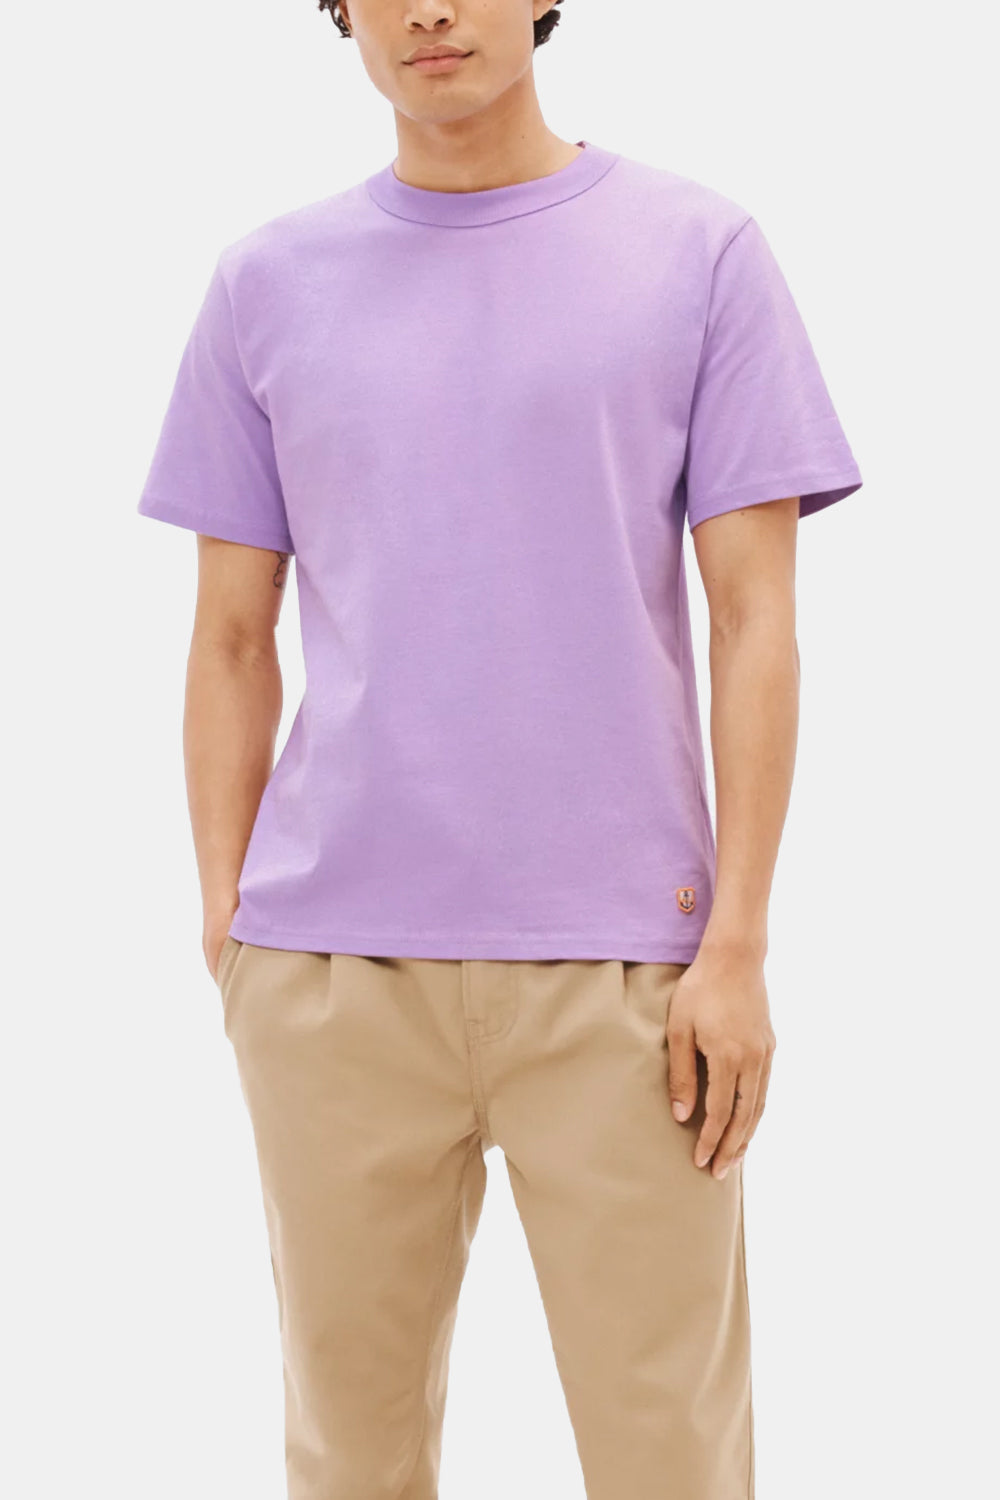 Armor Lux Heritage Organic Callac T-Shirt (Purple)
